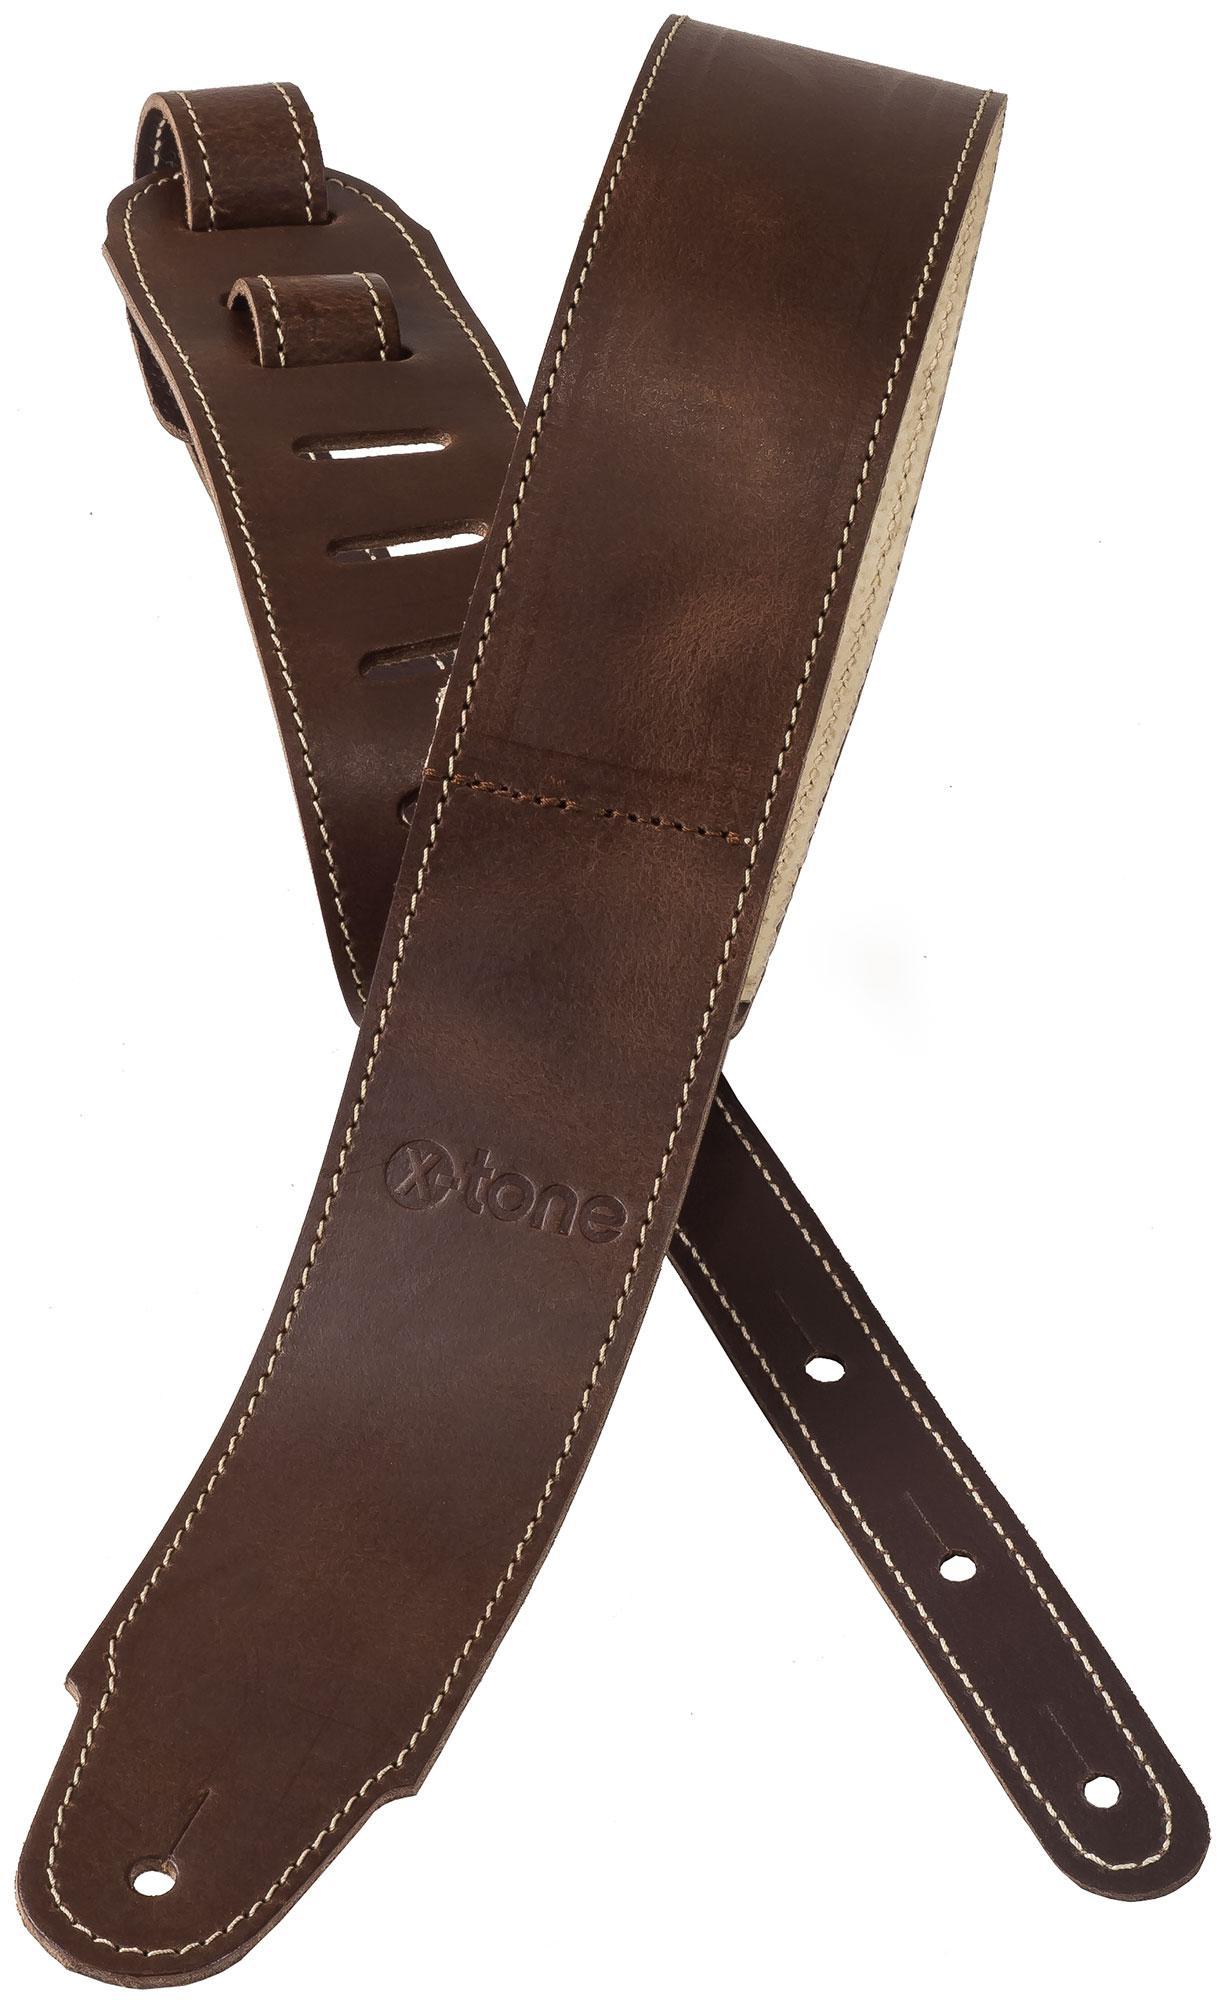 Guitar strap X-tone xg 3155 Plus Leather Guitar Strap - Brown